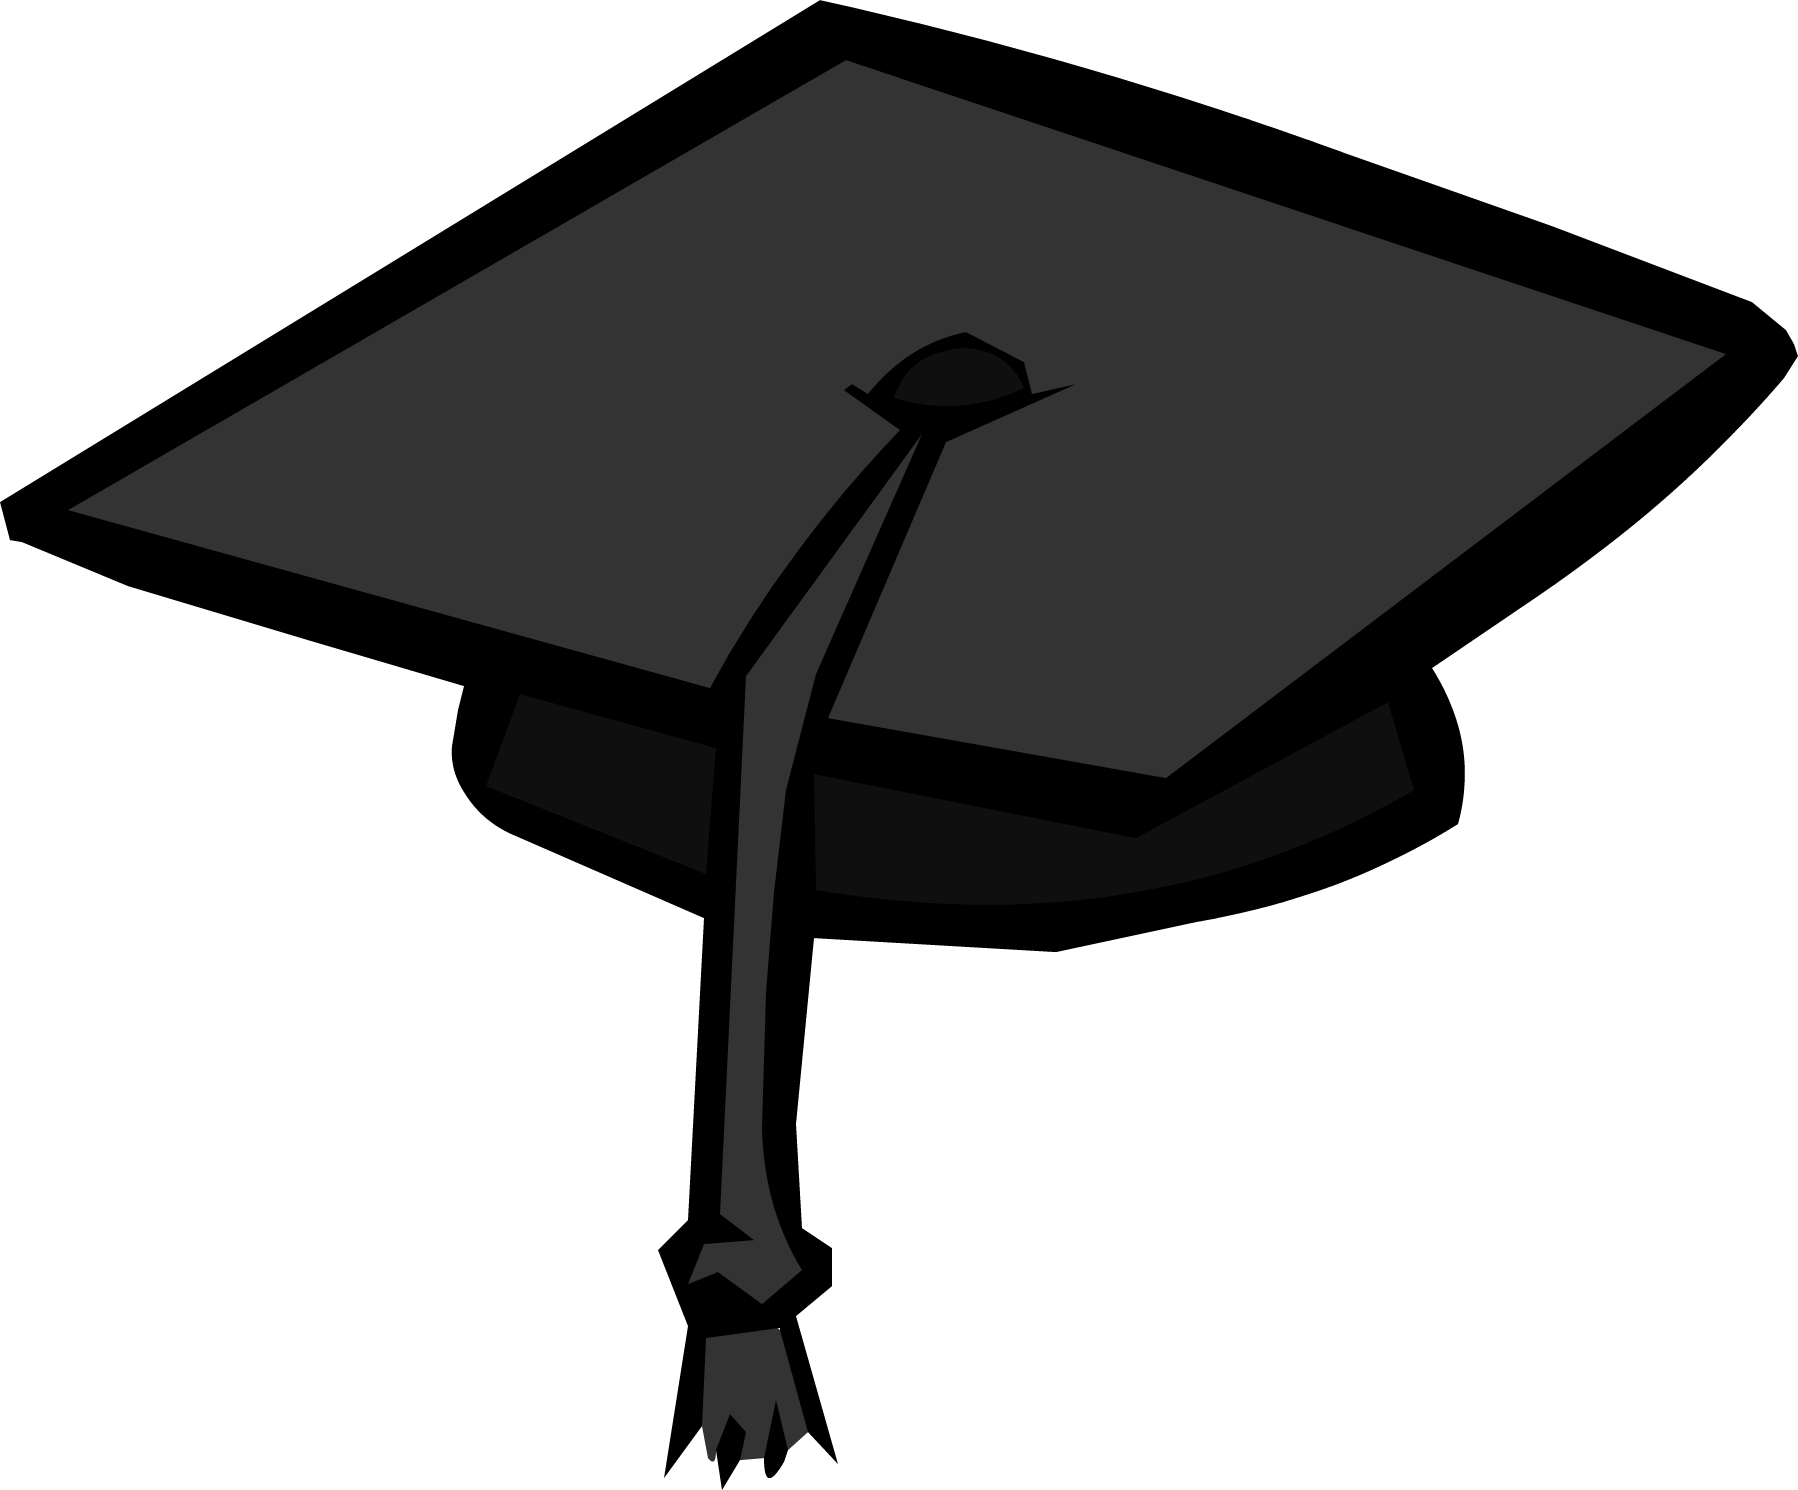 Black Graduation Cap | Club Penguin Wiki | Fandom powered by Wikia